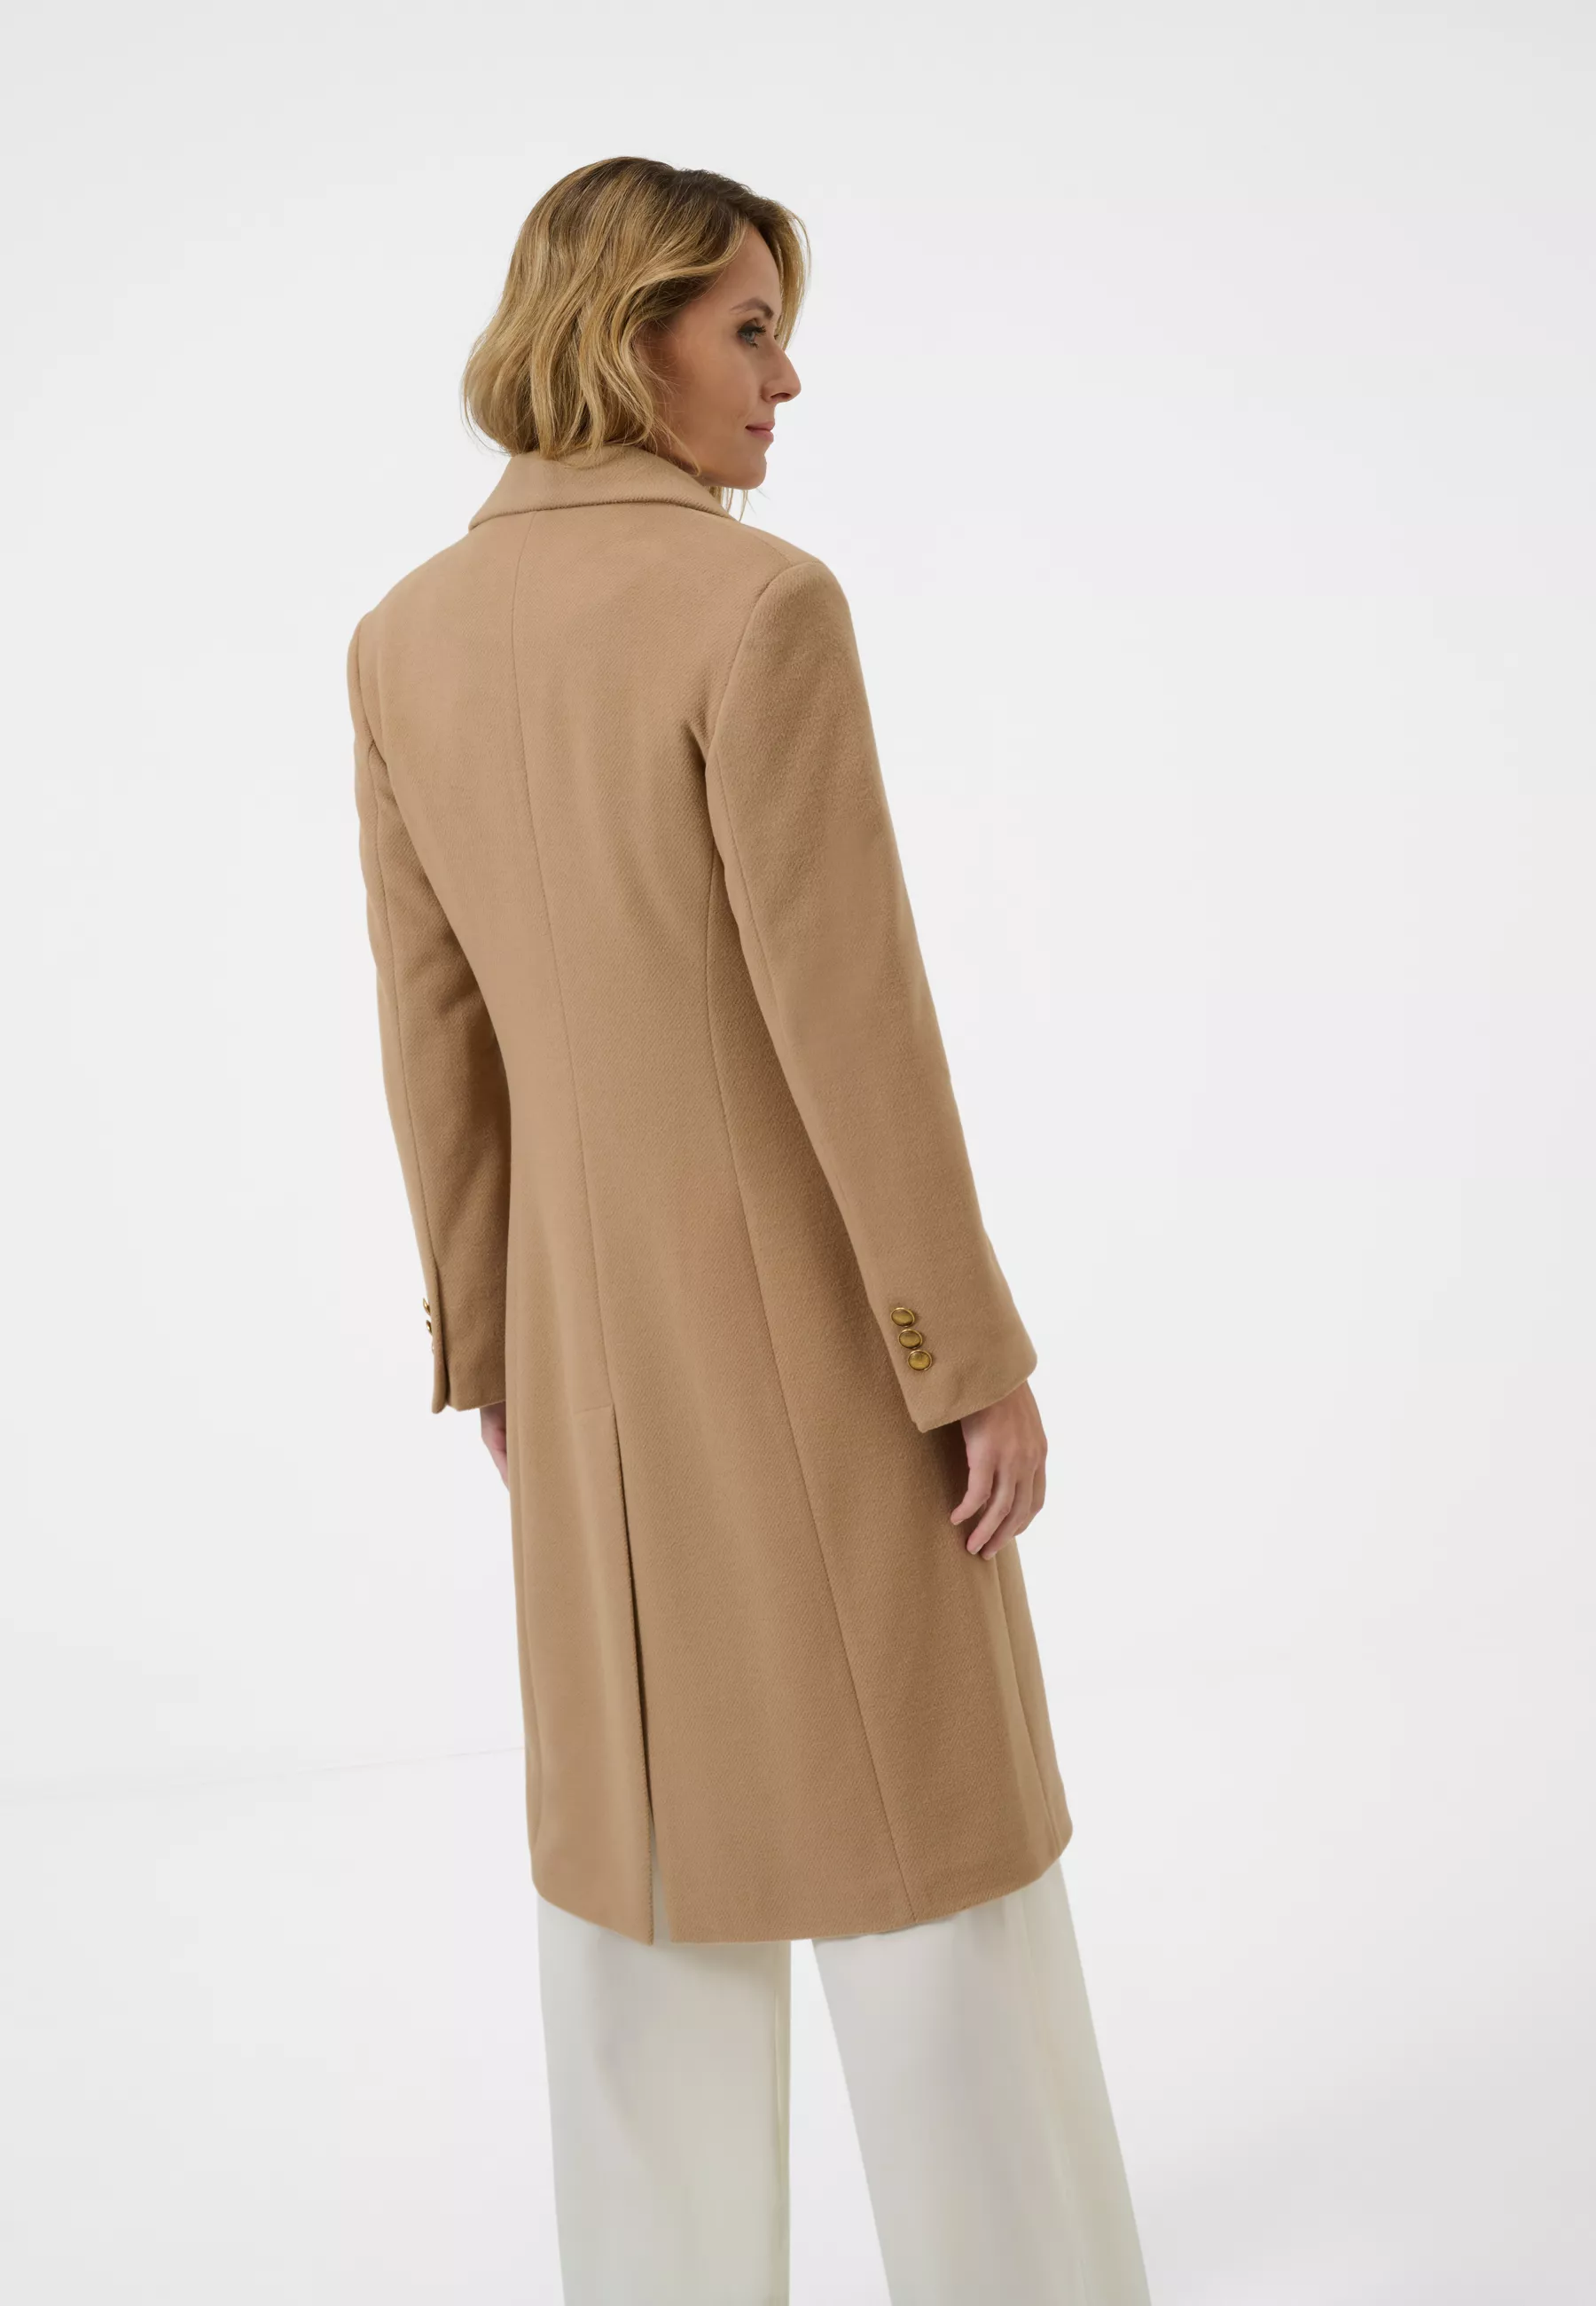 Damen Textil Mantel Giulia in Camel von Ricano, Rückansicht am Model